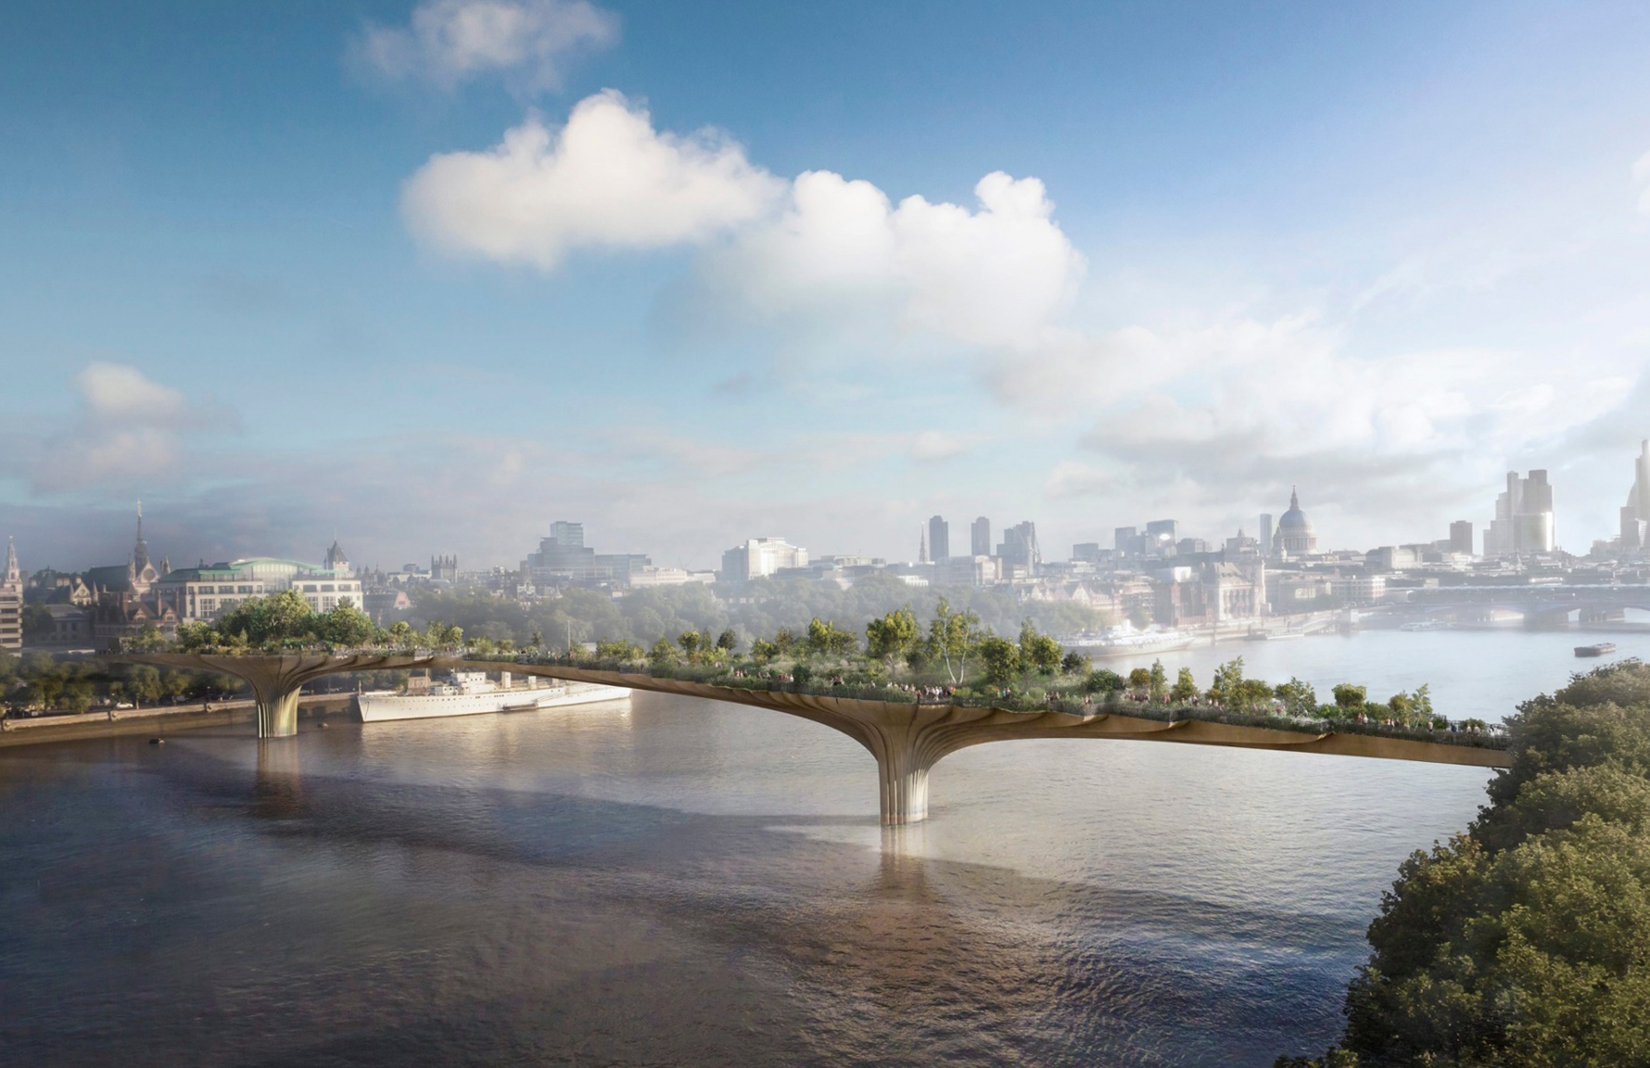 Heatherwick's proposed Garden Bridge project